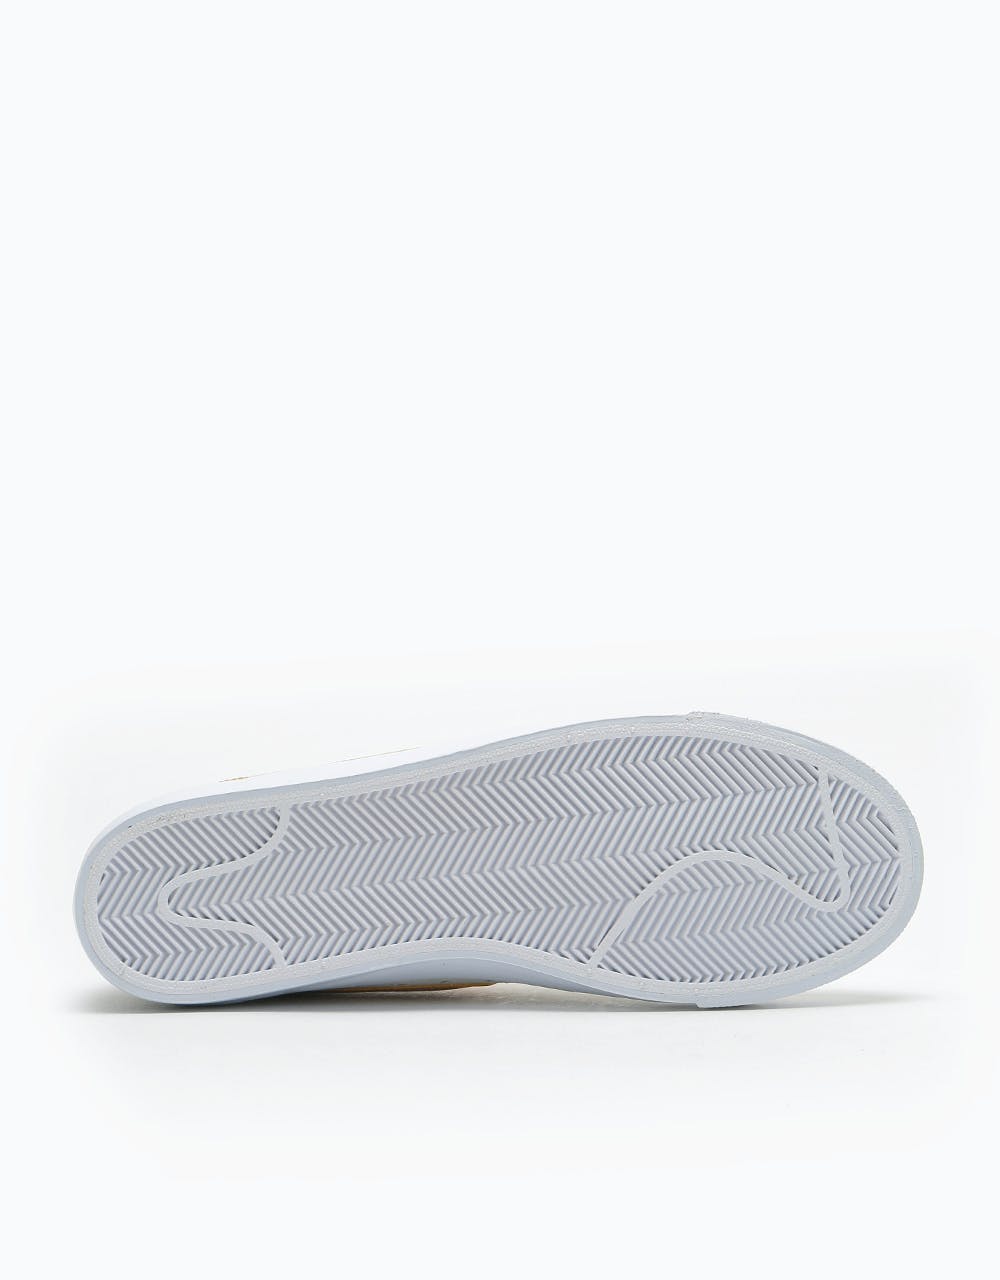 Nike SB Blazer Low GT Skate Shoes - White/Club Gold-White-Light Thistl